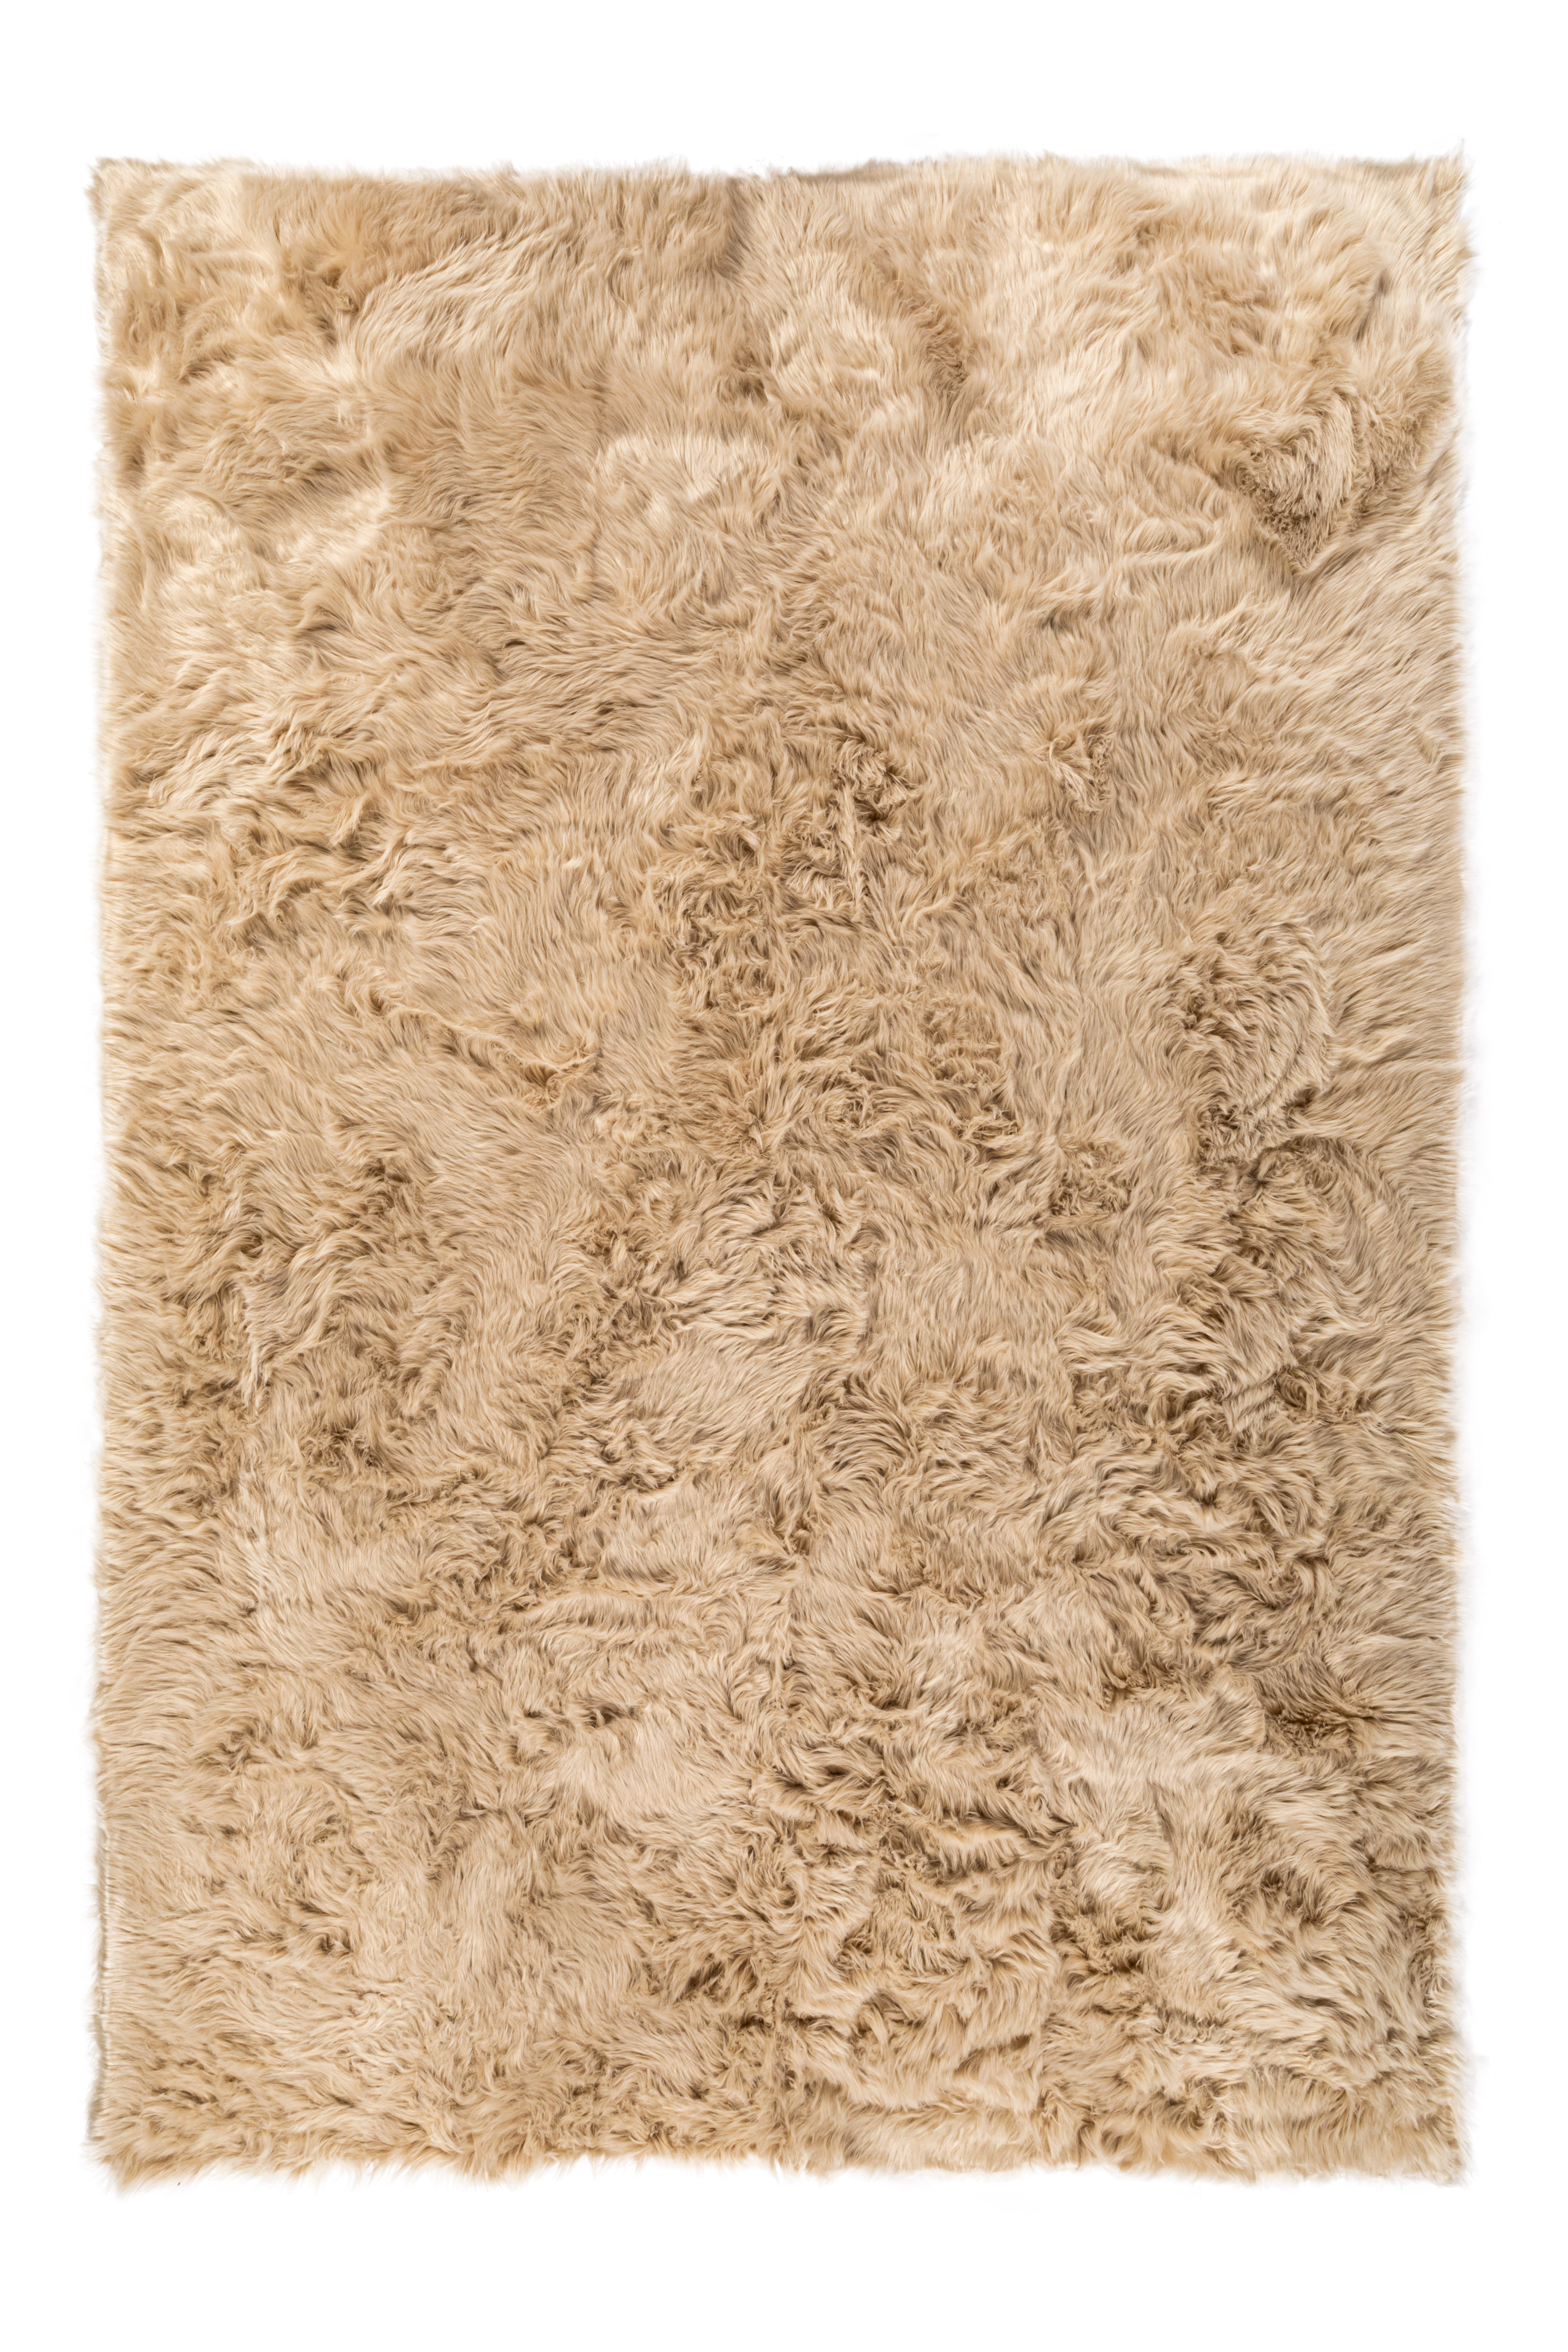 Sheepskin natural, 180x270cm, rectangular